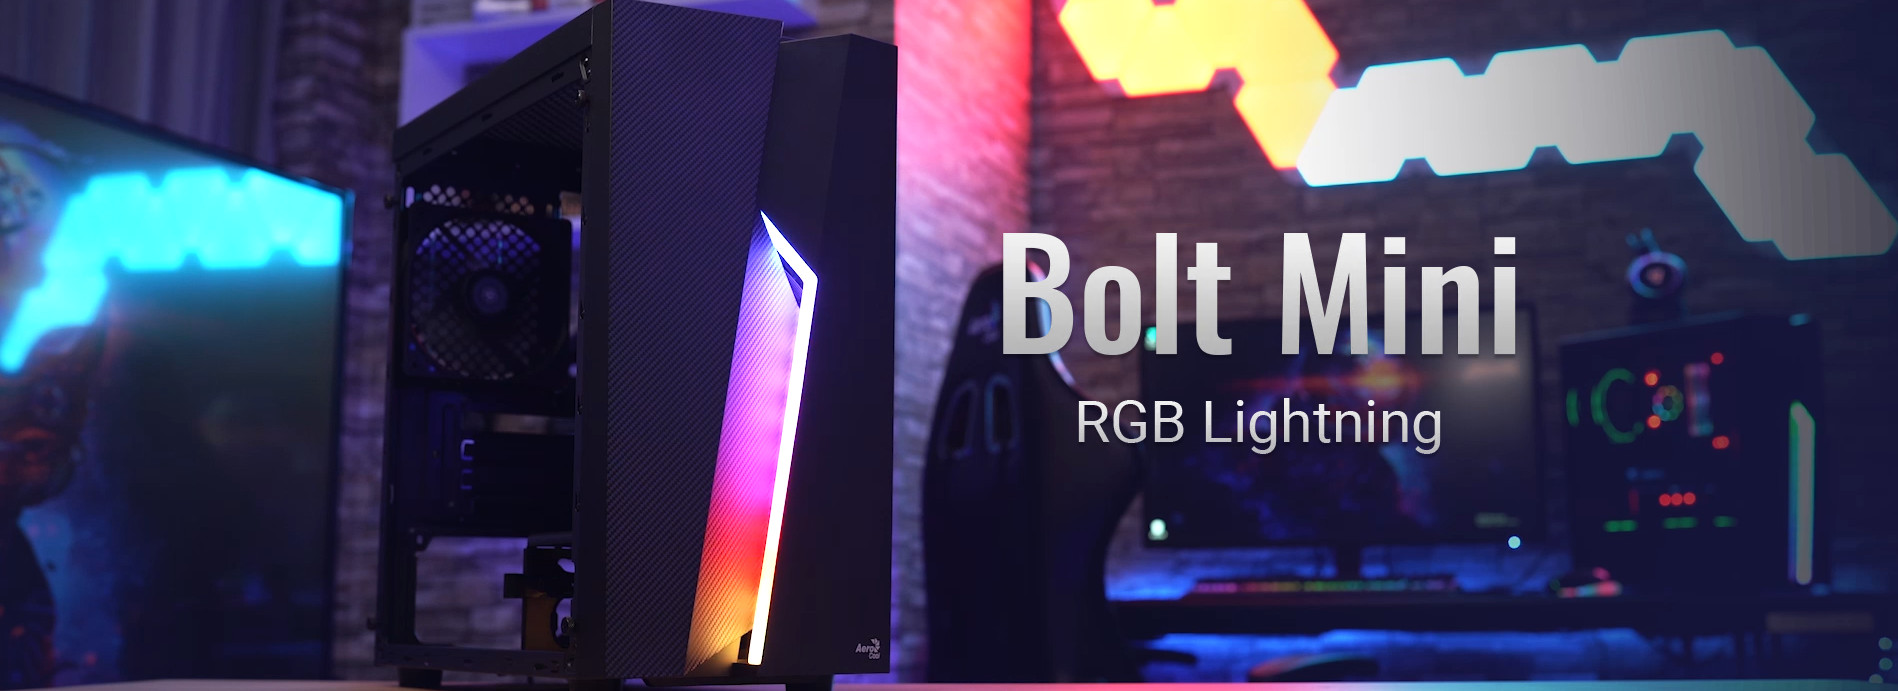 Aero Cool Bolt Mini (Mini-Tower/Led RGB) giới thiệu